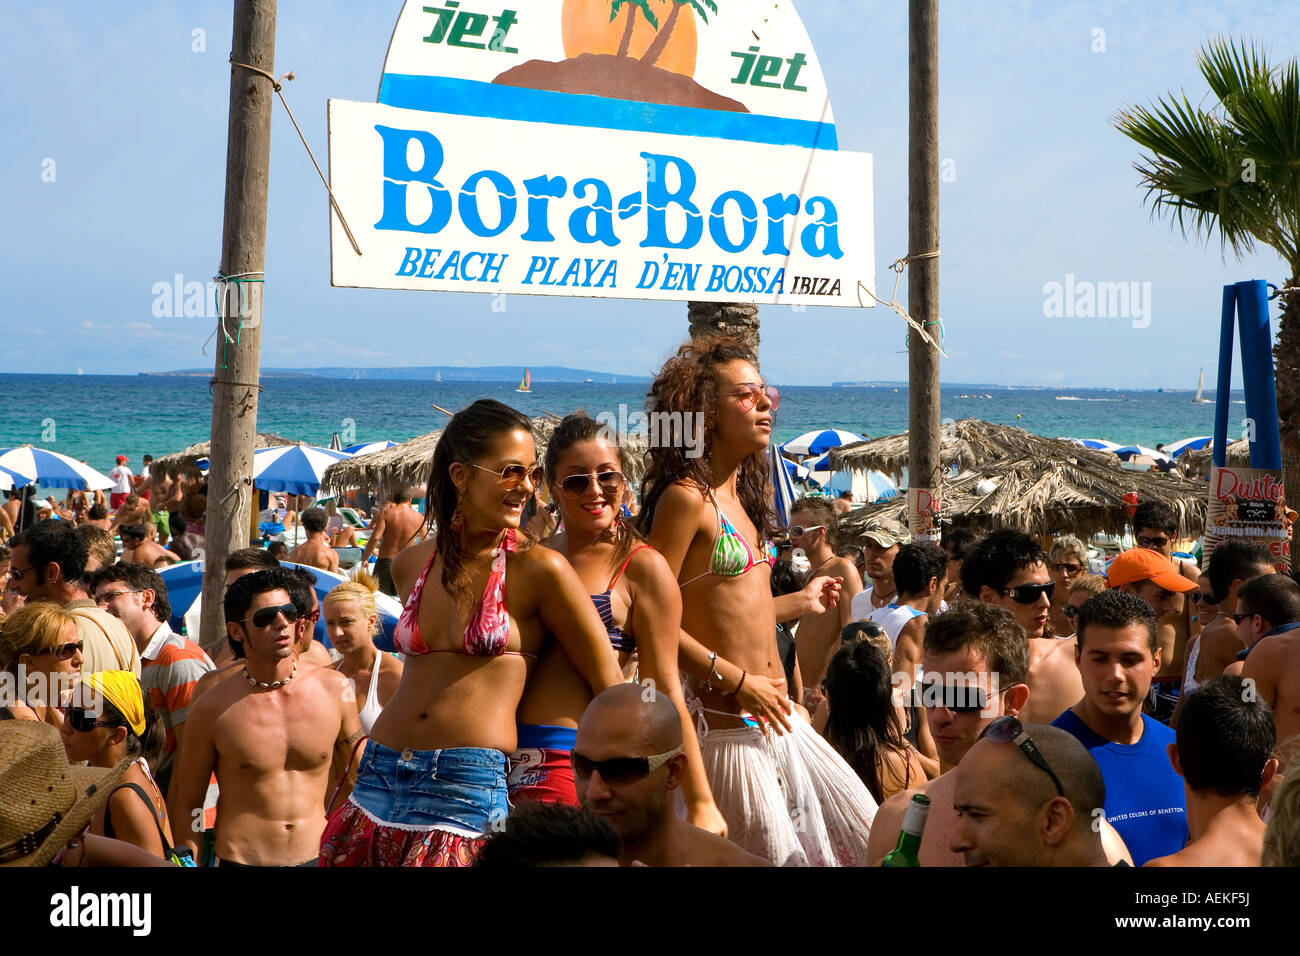 Bora bora beach ibiza hi-res stock photography and images - Alamy